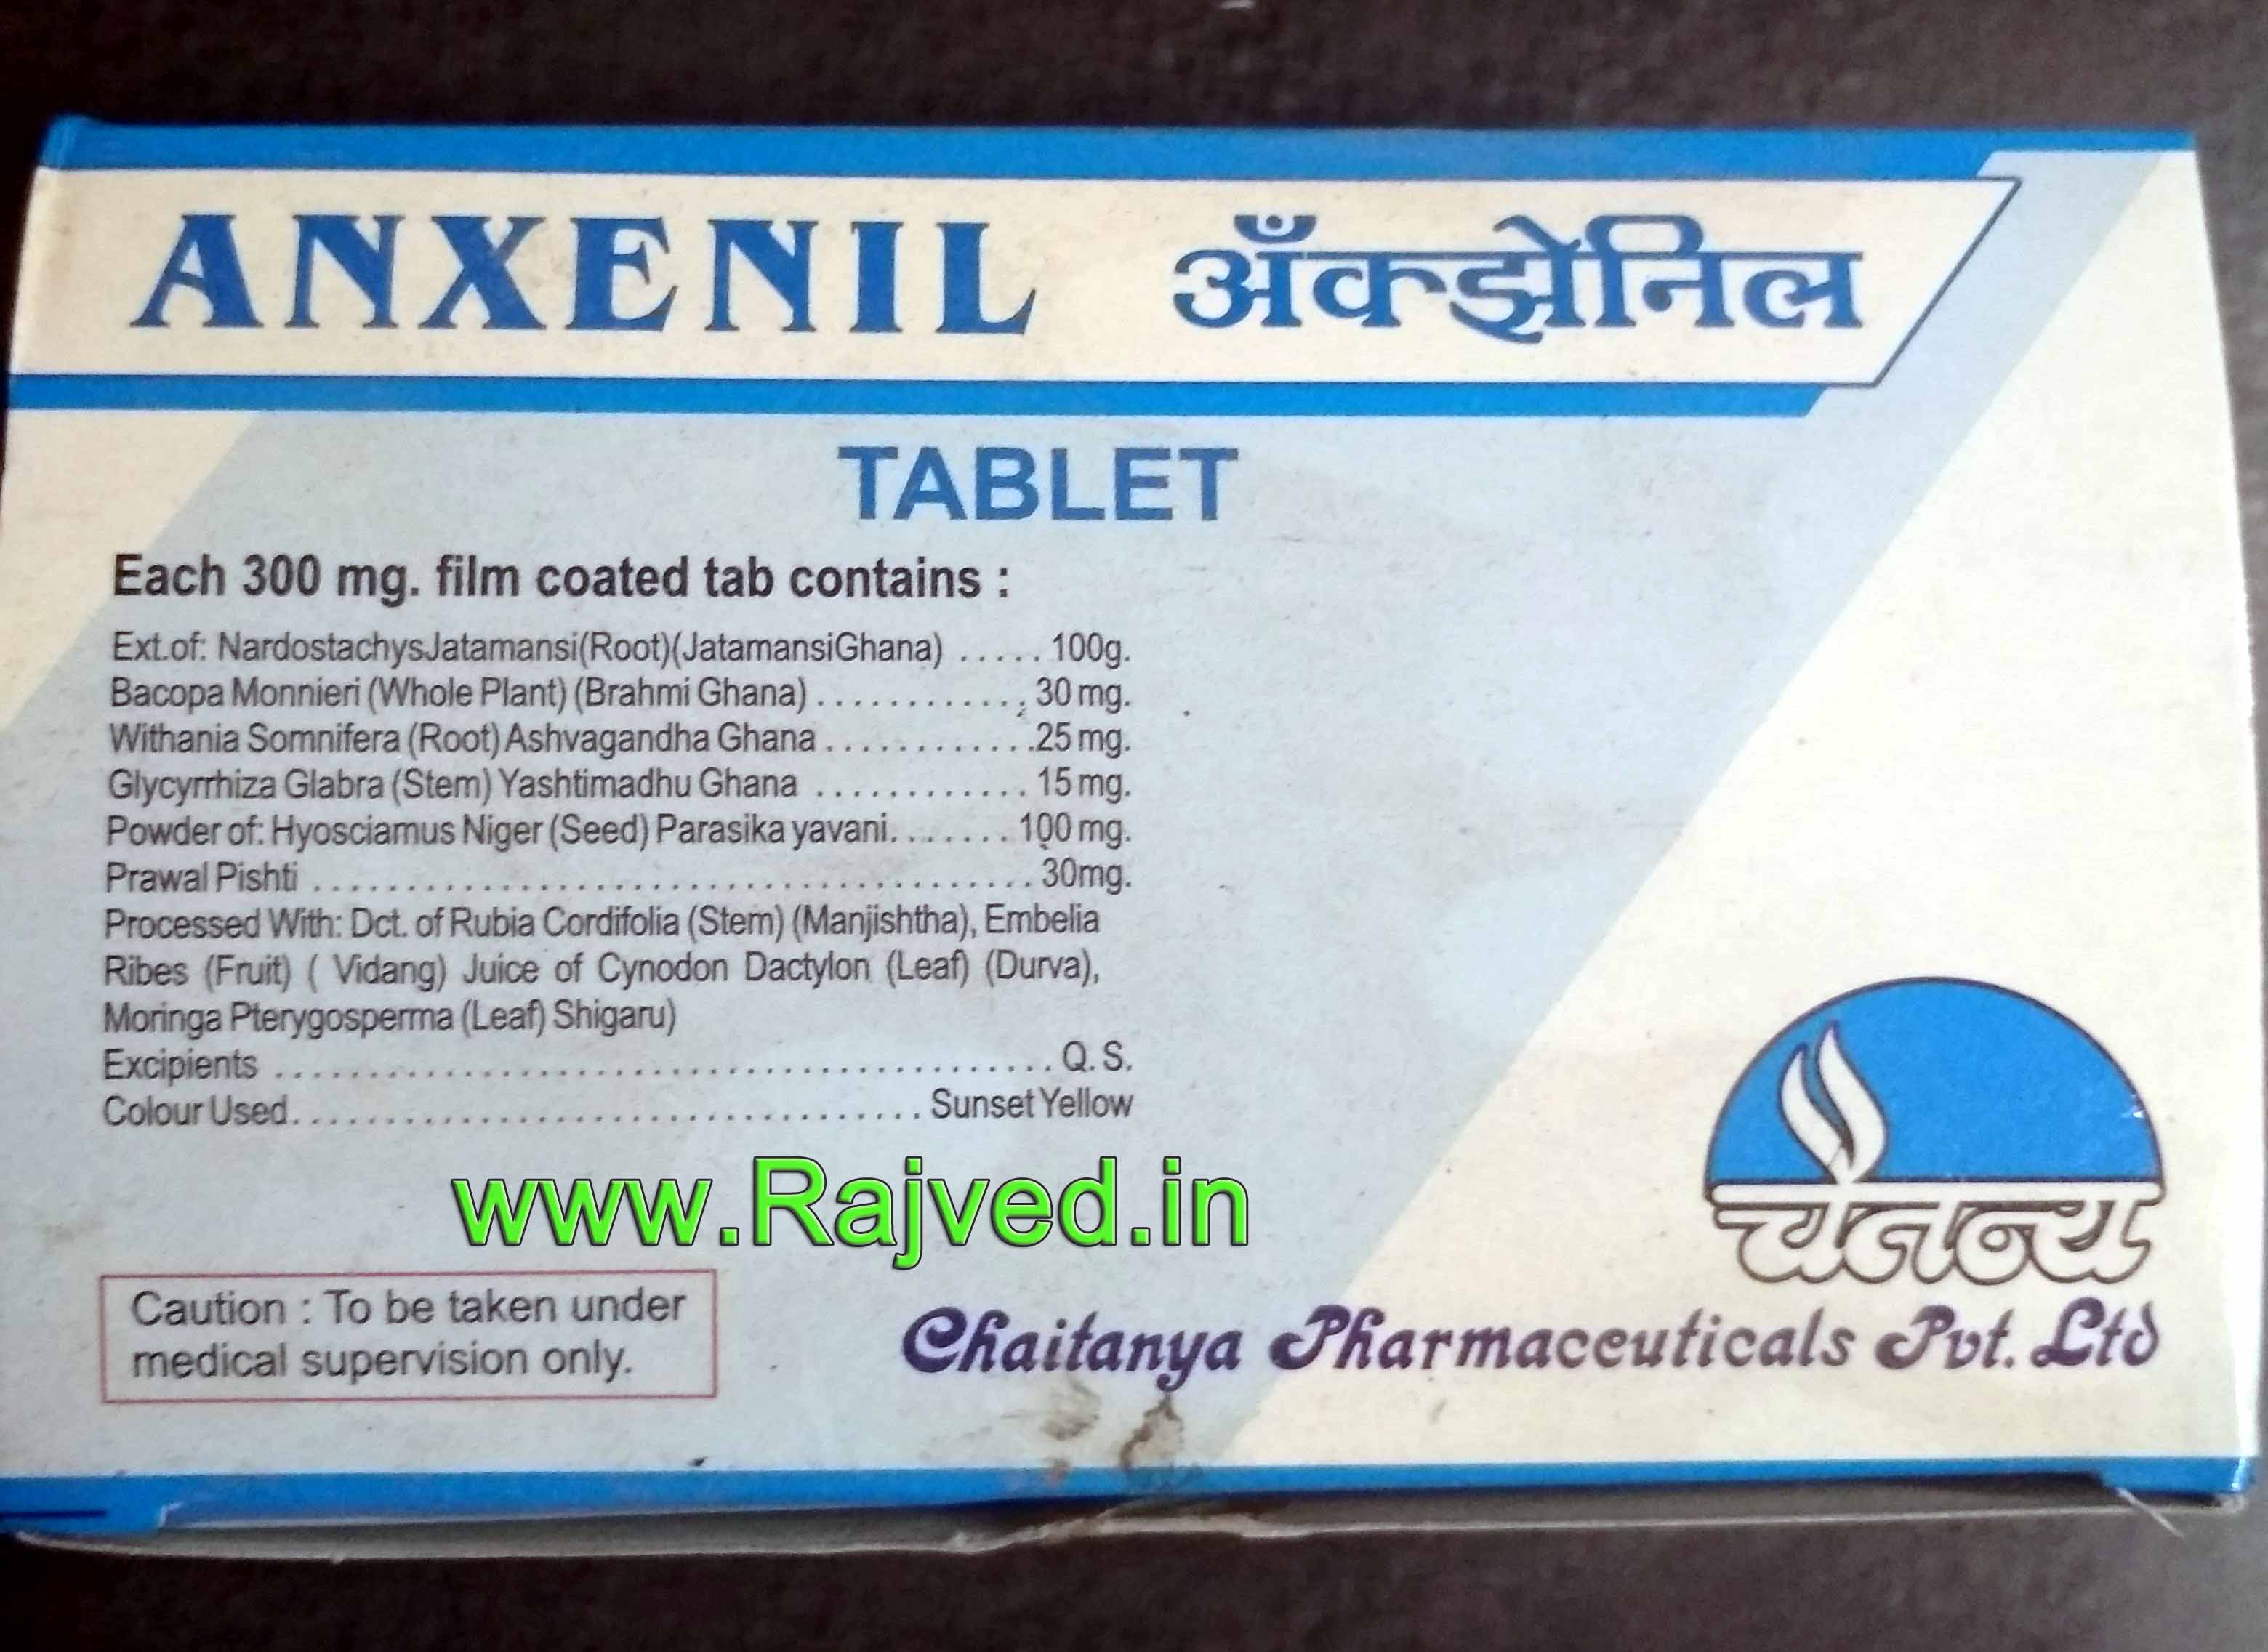 anxenil tablet 60tab upto 20% off chaitanya pharmaceuticals